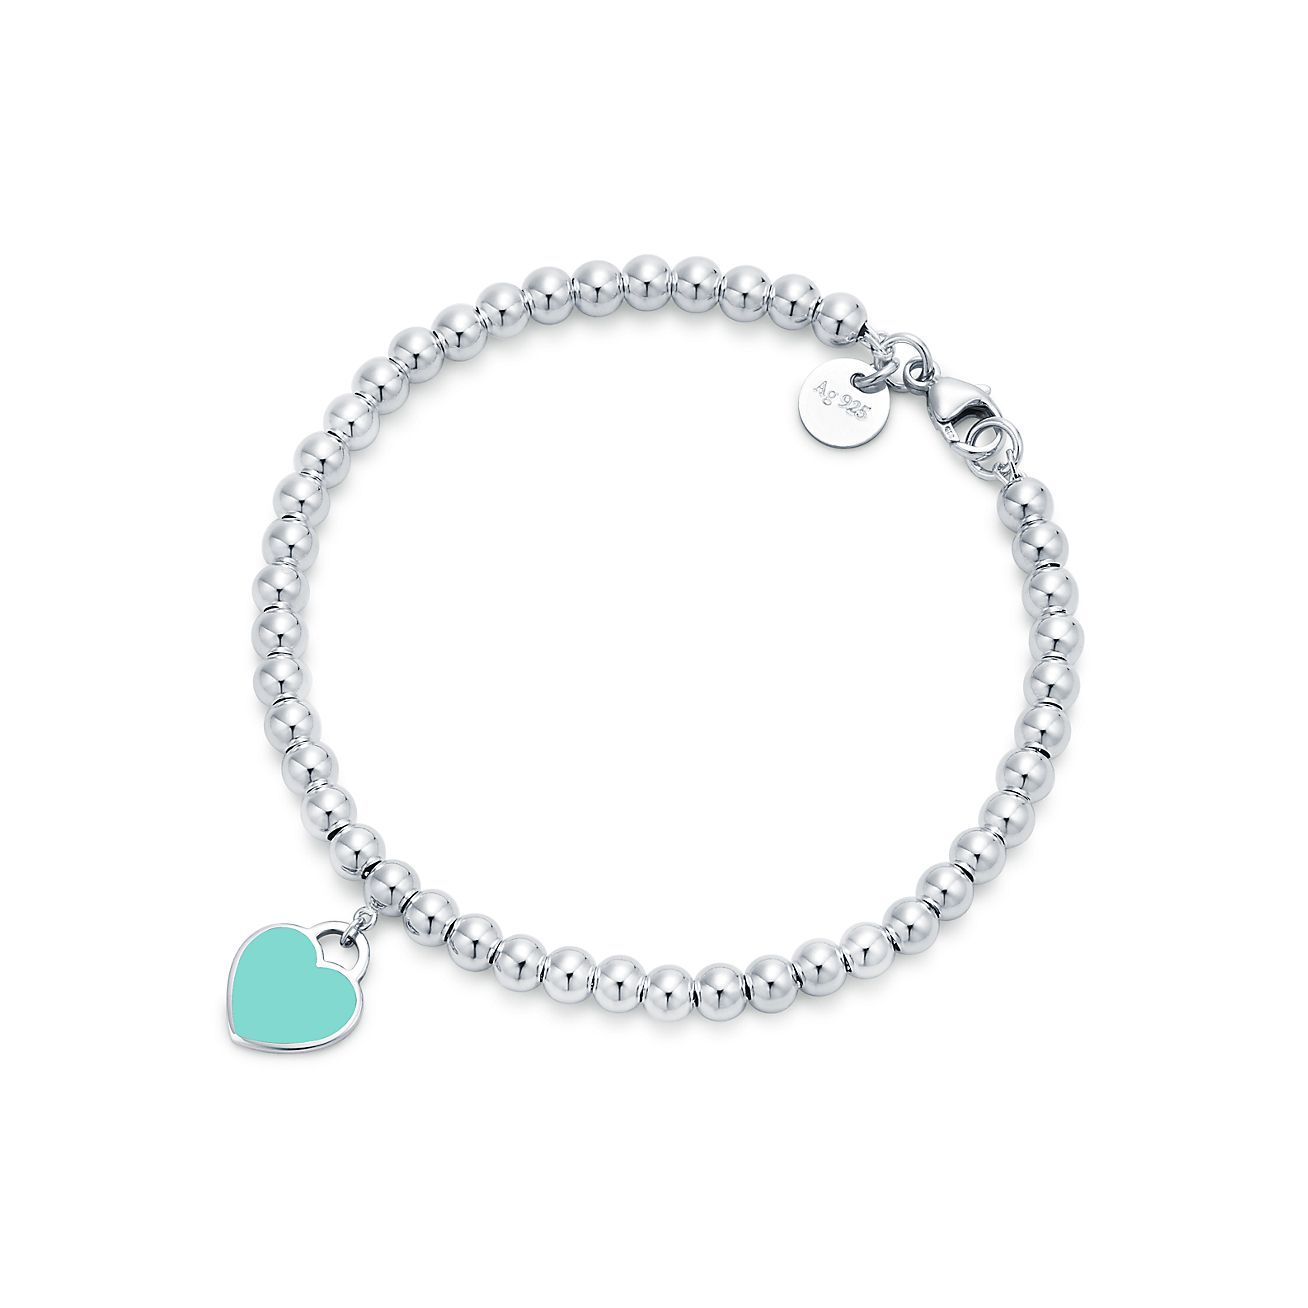 Return to Tiffany™Tiffany Blue® Heart Tag Bead Bracelet
in Silver